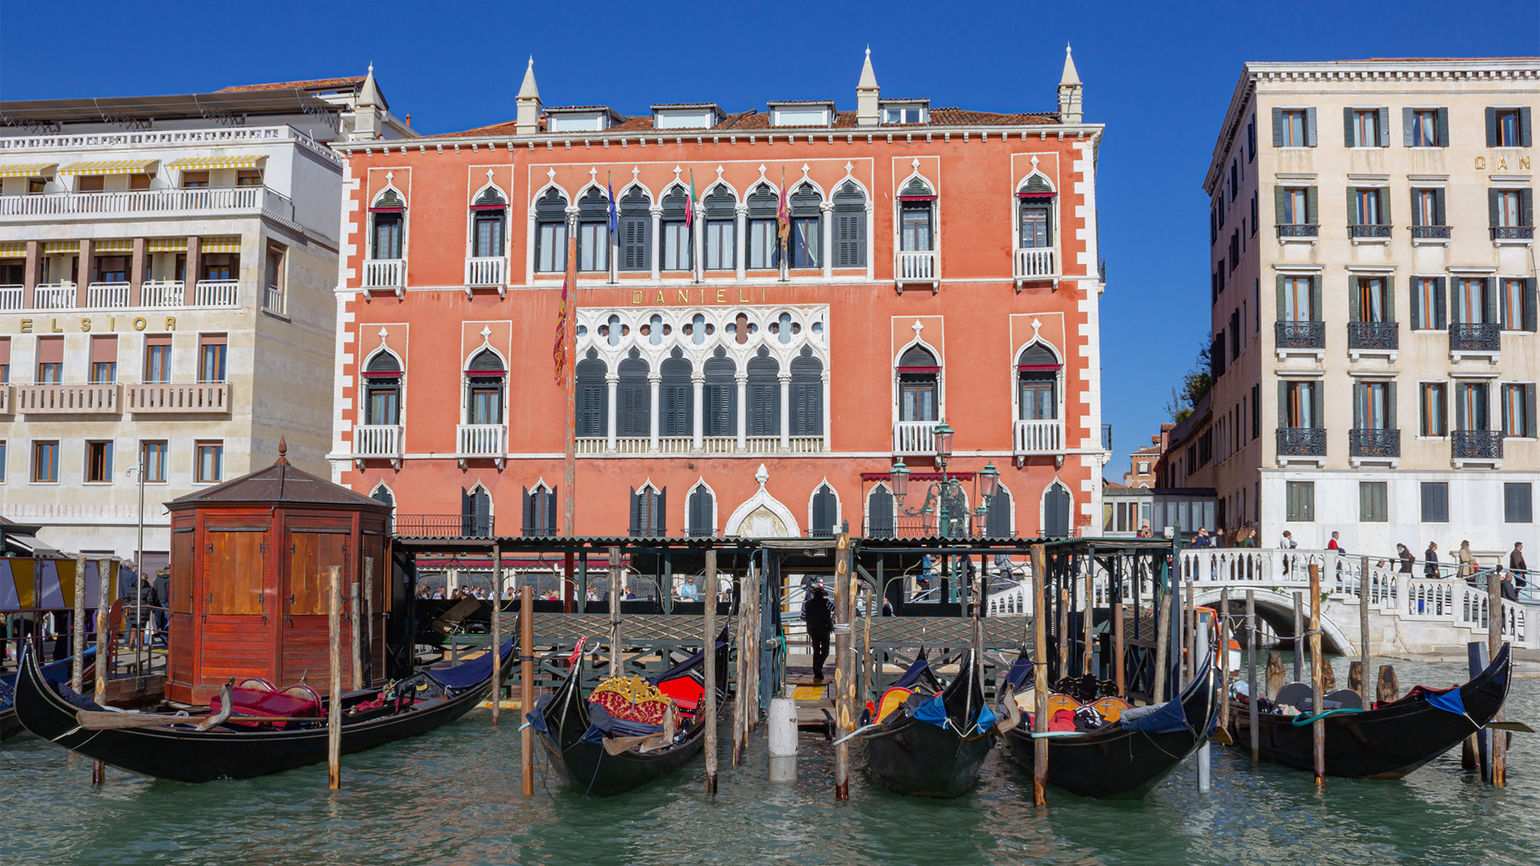 Four Seasons is taking over Venice's Hotel Danieli